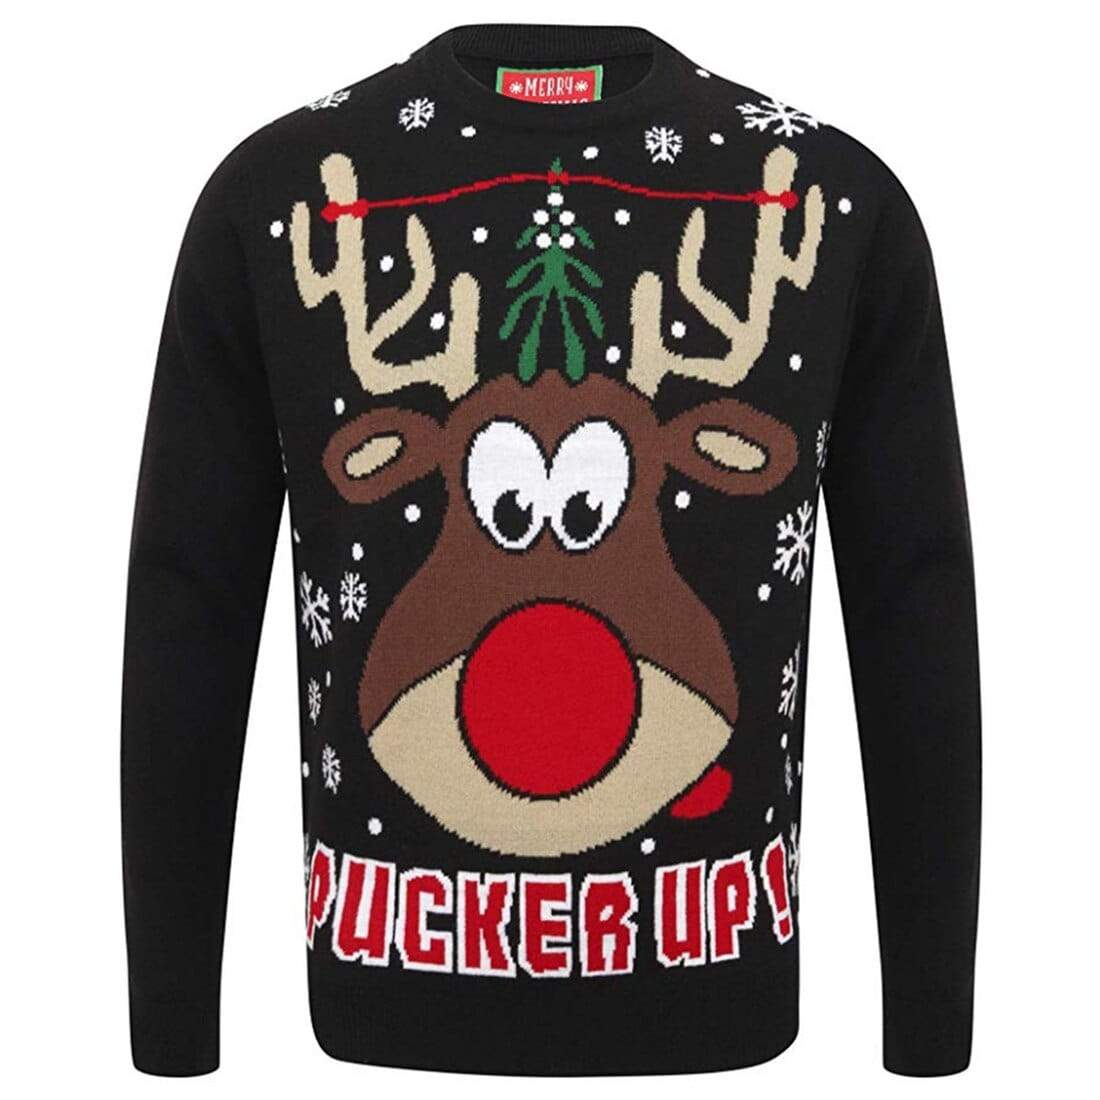 Mr Crimbo Mens Pucker Up Reindeer Knit Christmas Jumper - MrCrimbo.co.uk -SRG1A13480_F - Black -festive jumper